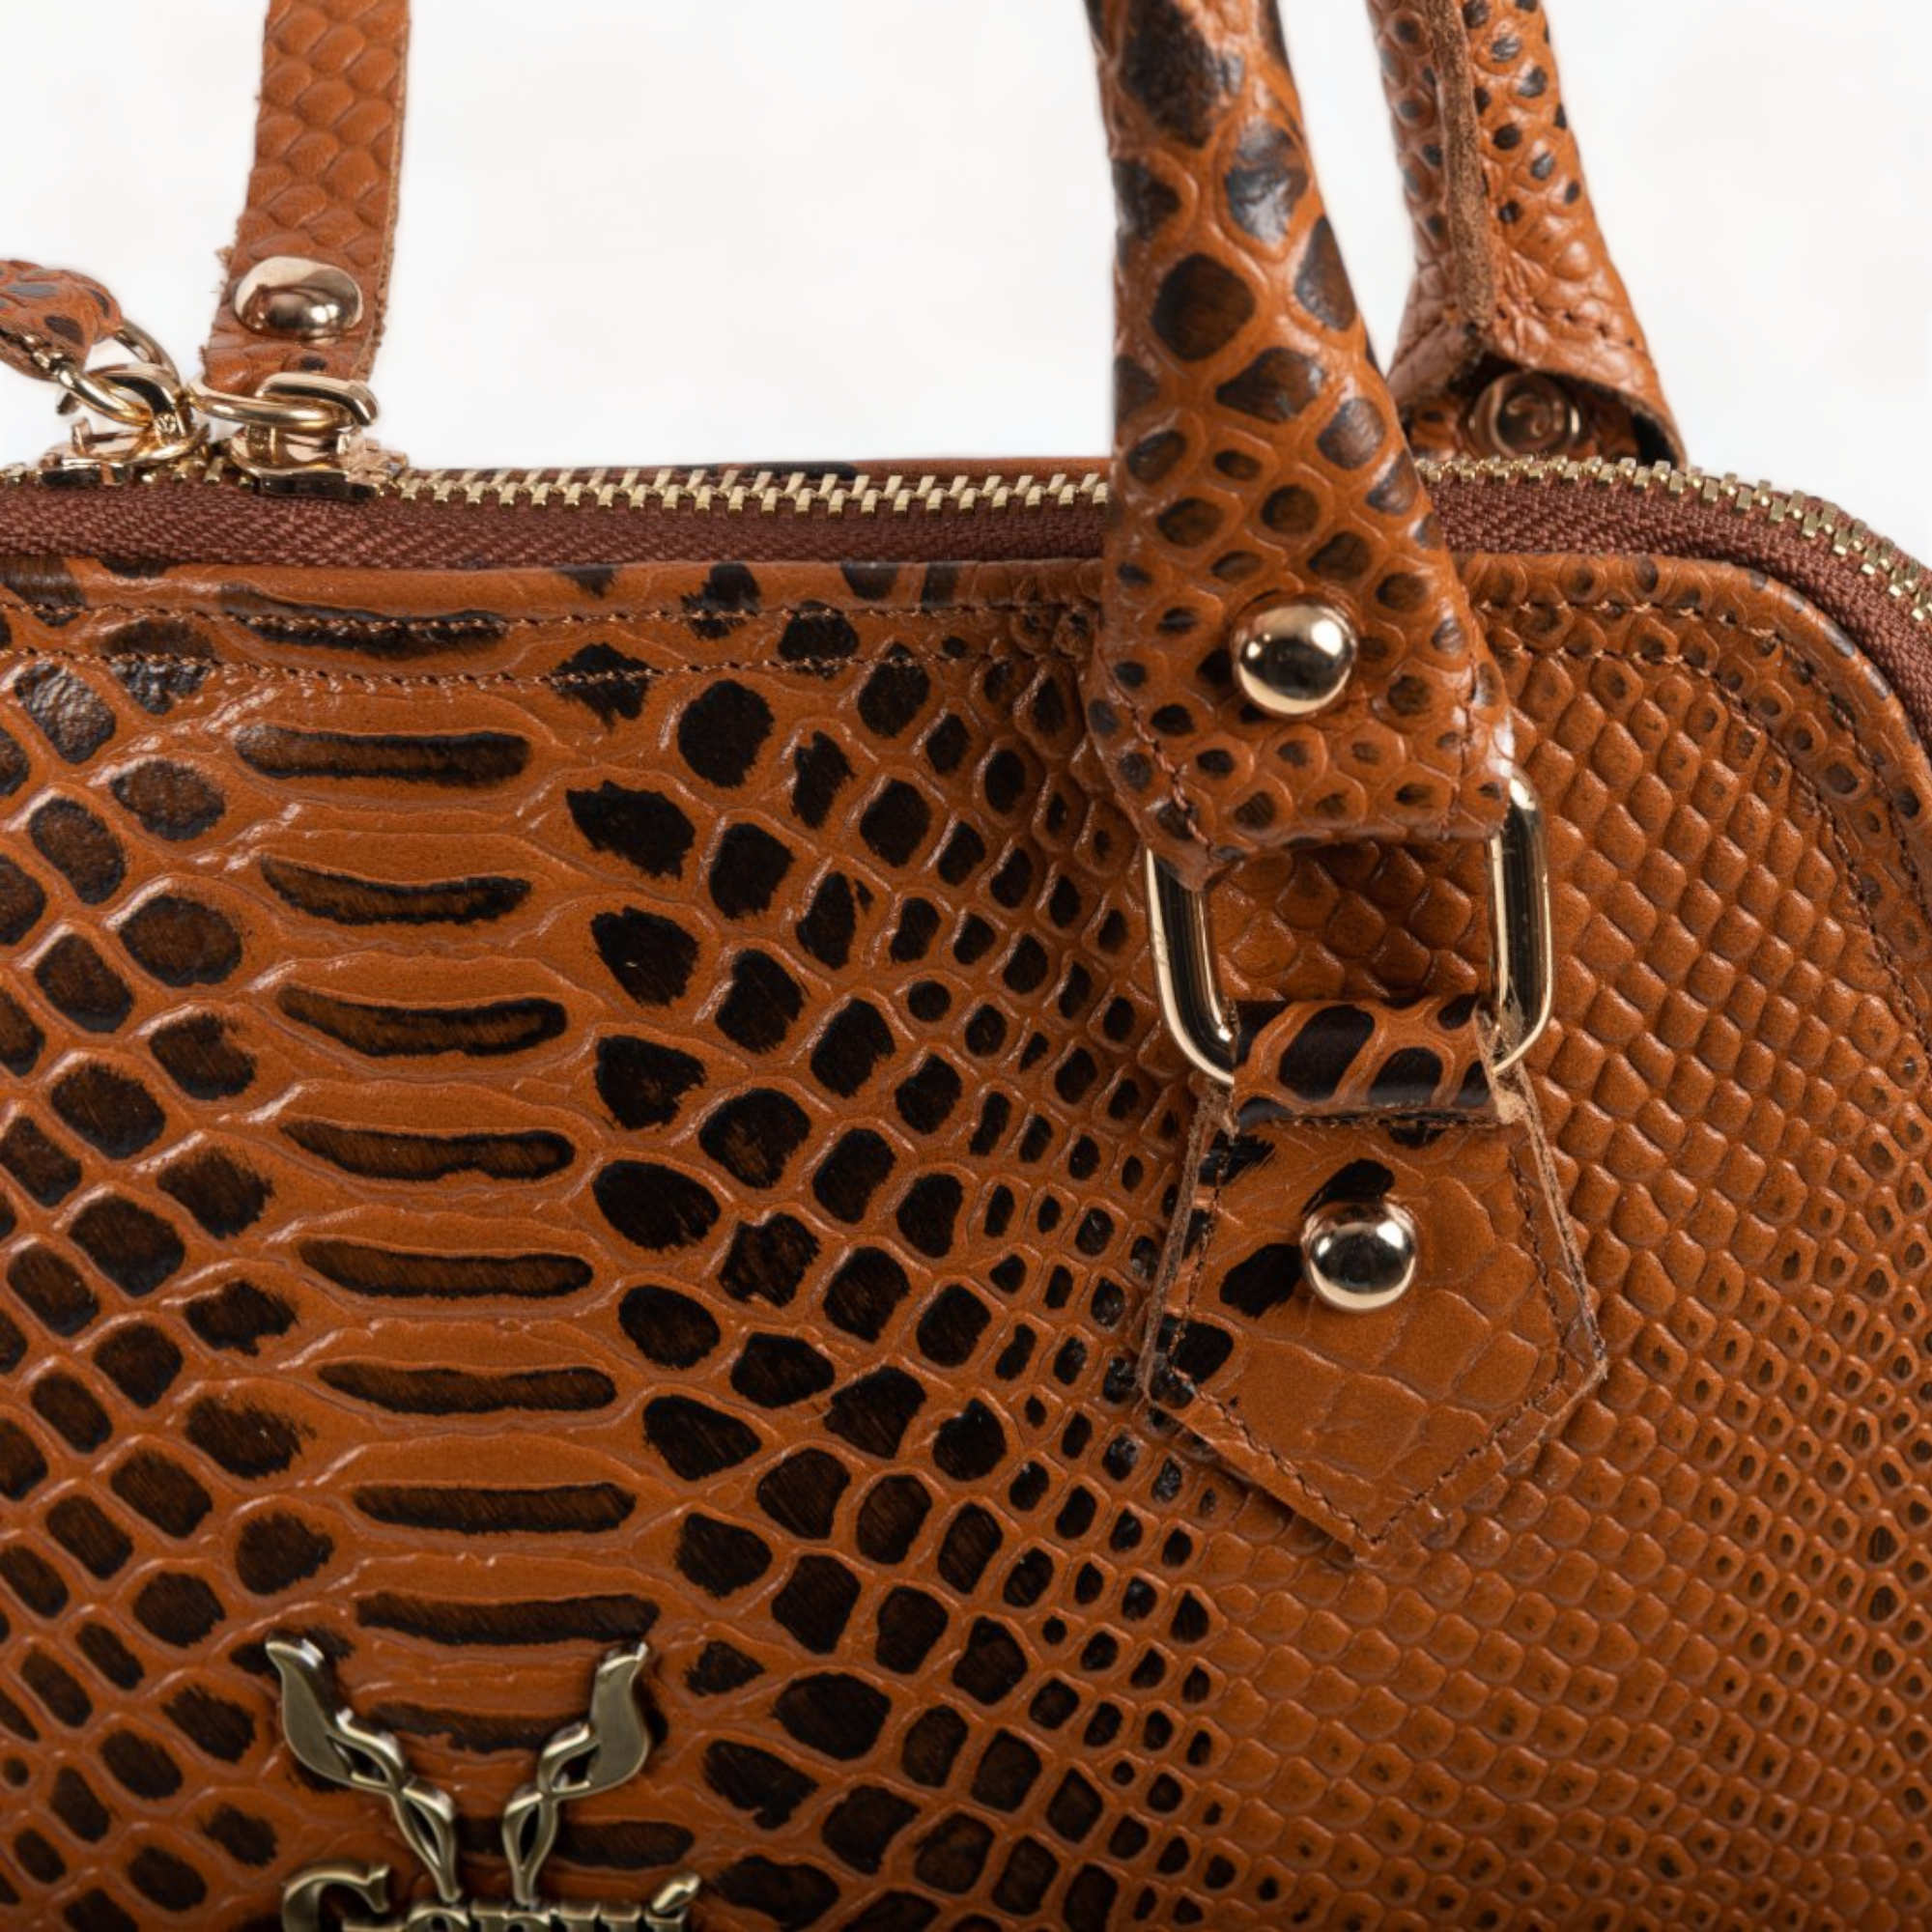 Leather handbag in brown color